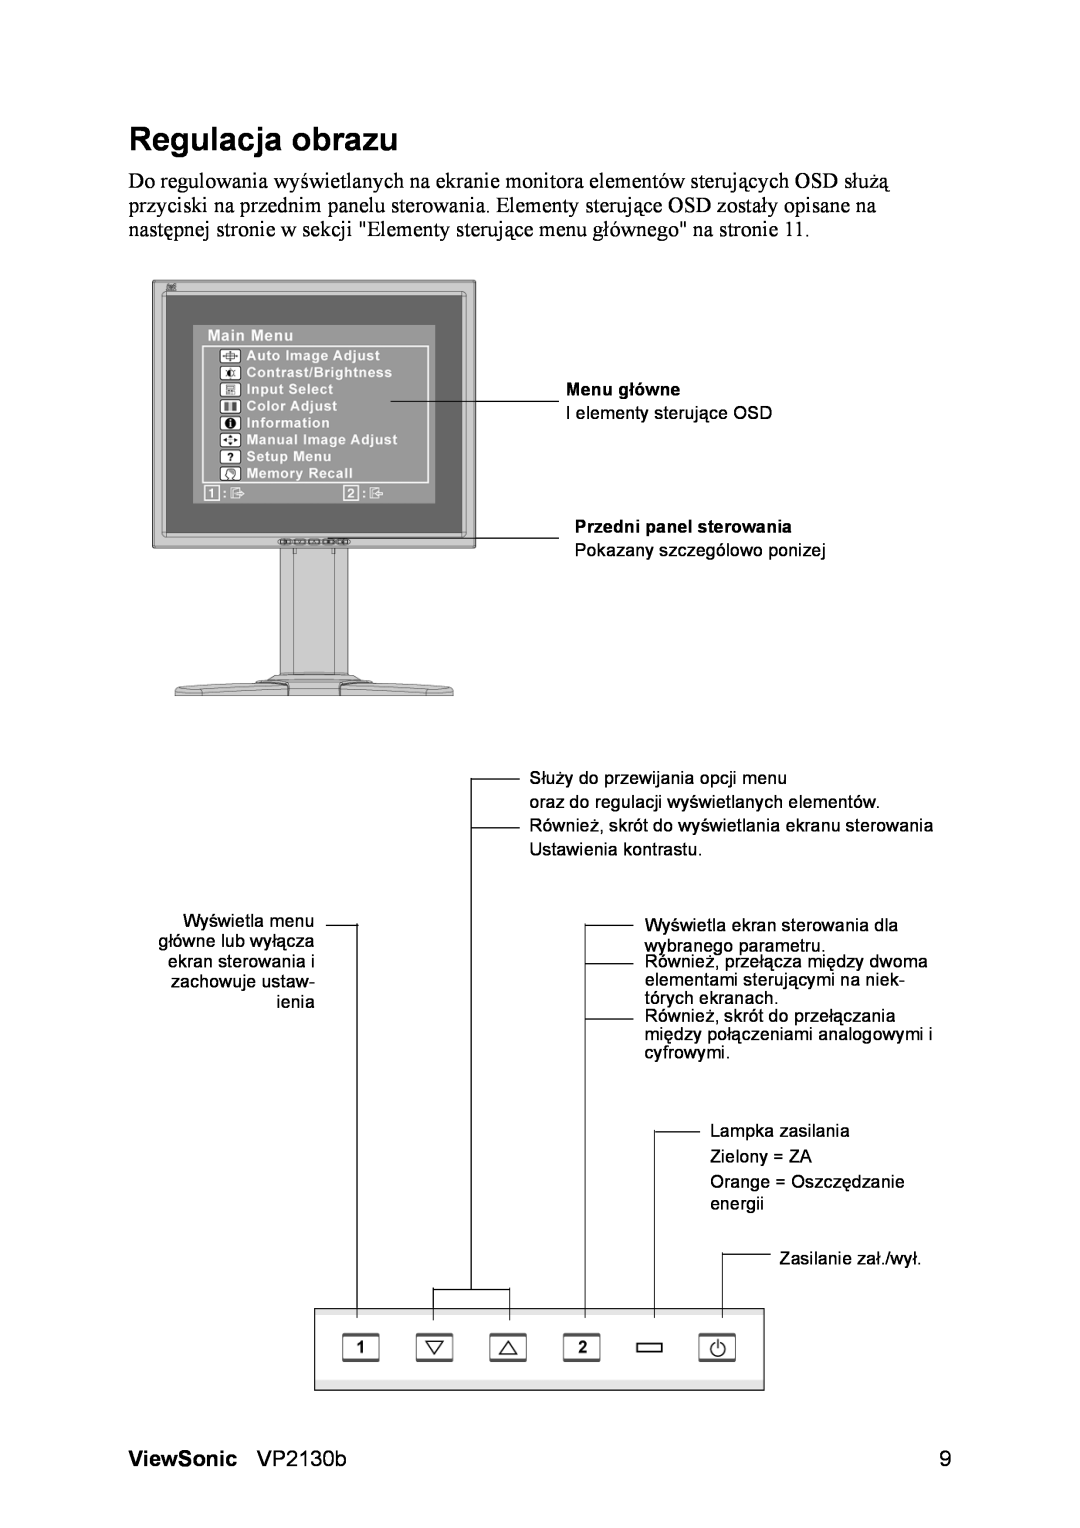 ViewSonic VS10773 manual Regulacja obrazu, ViewSonic VP2130b, Menu główne 